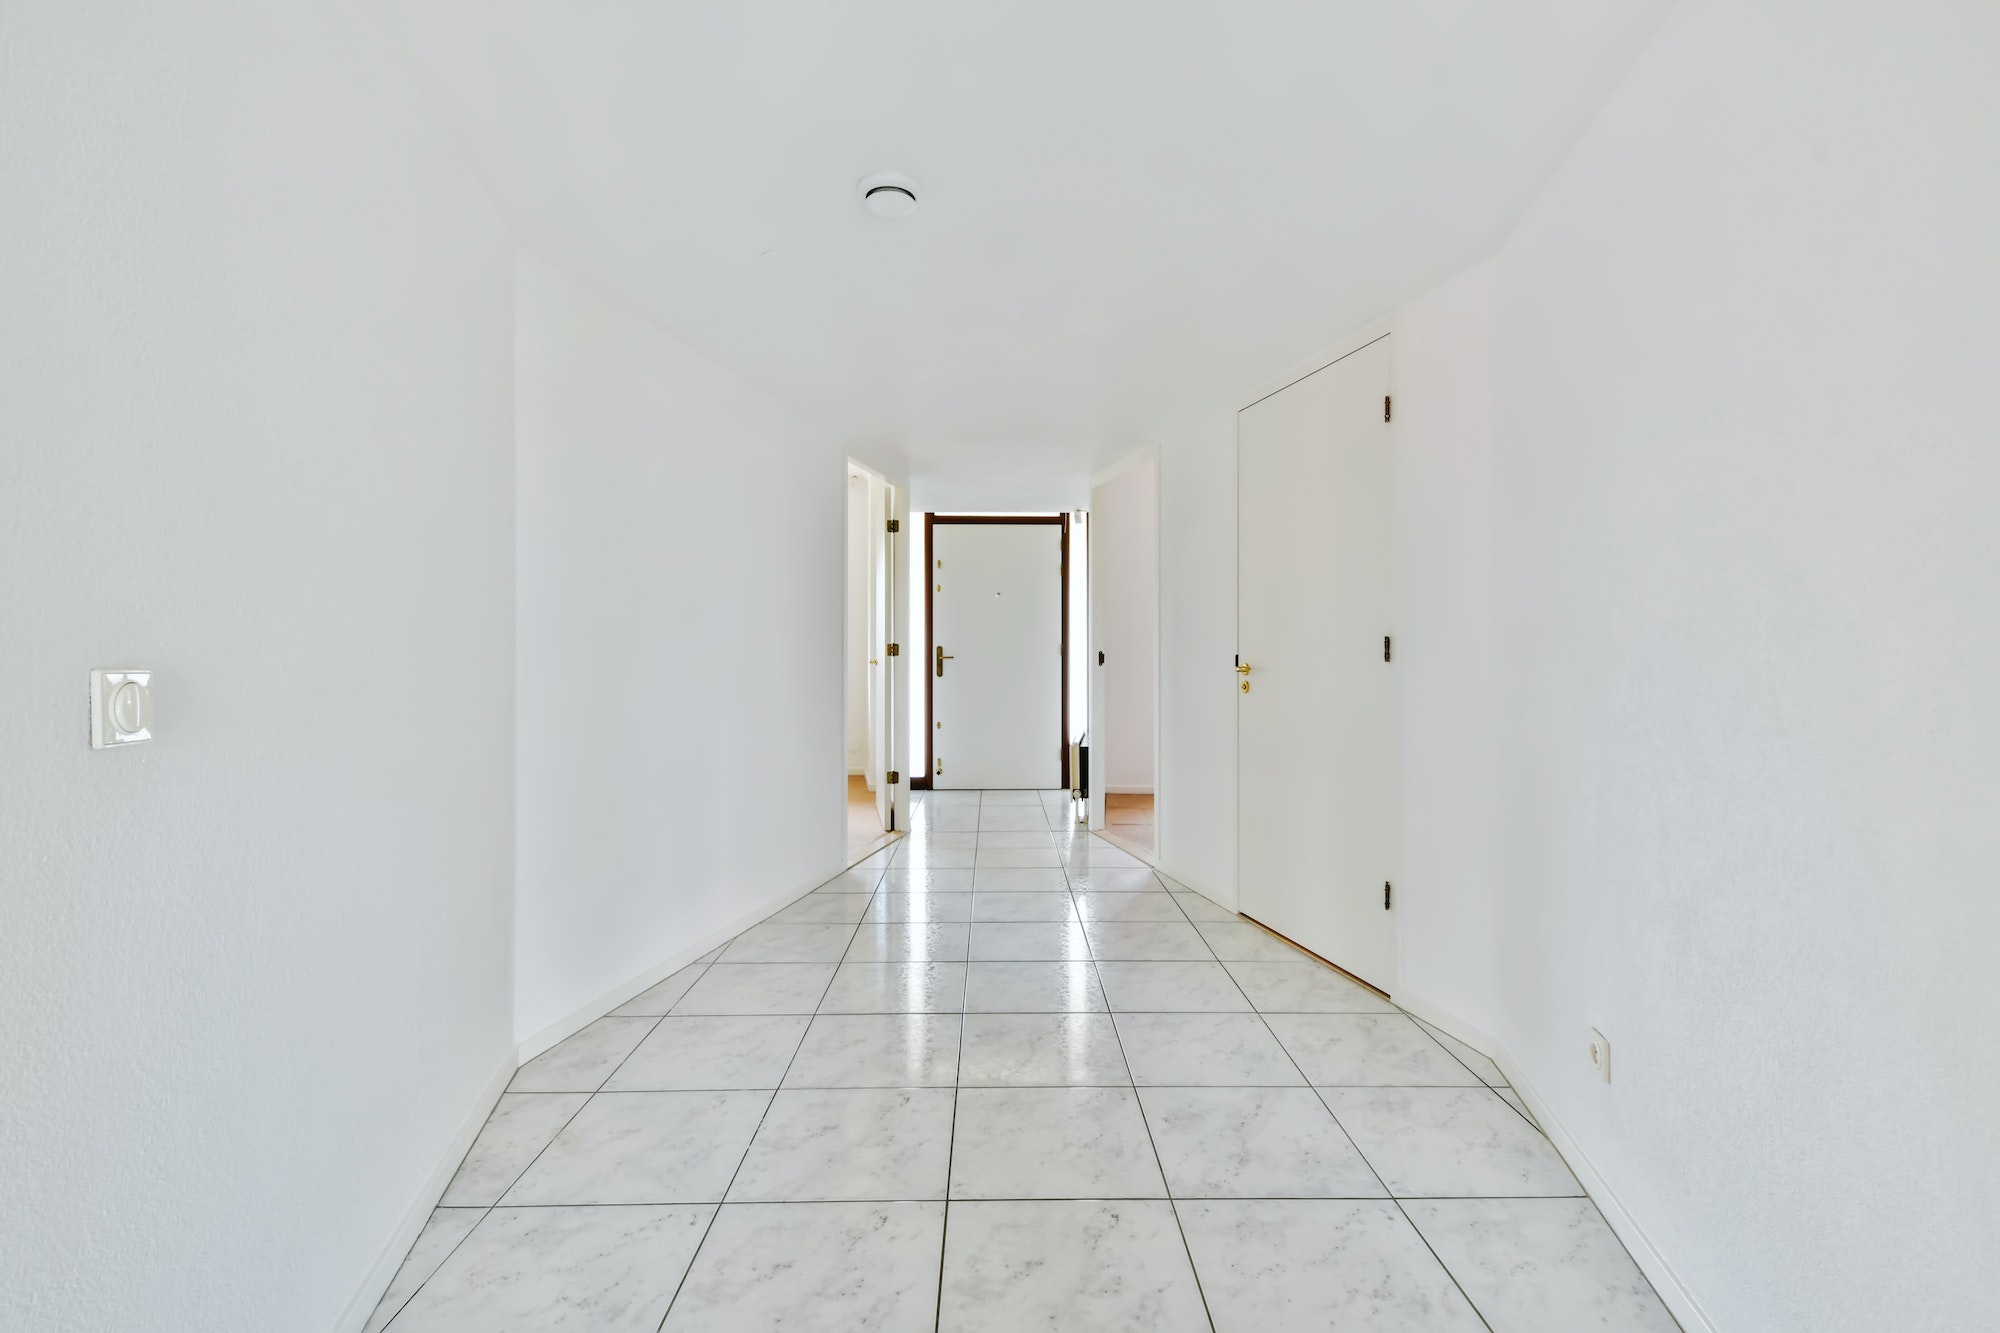 Bright hallway with tiled floor